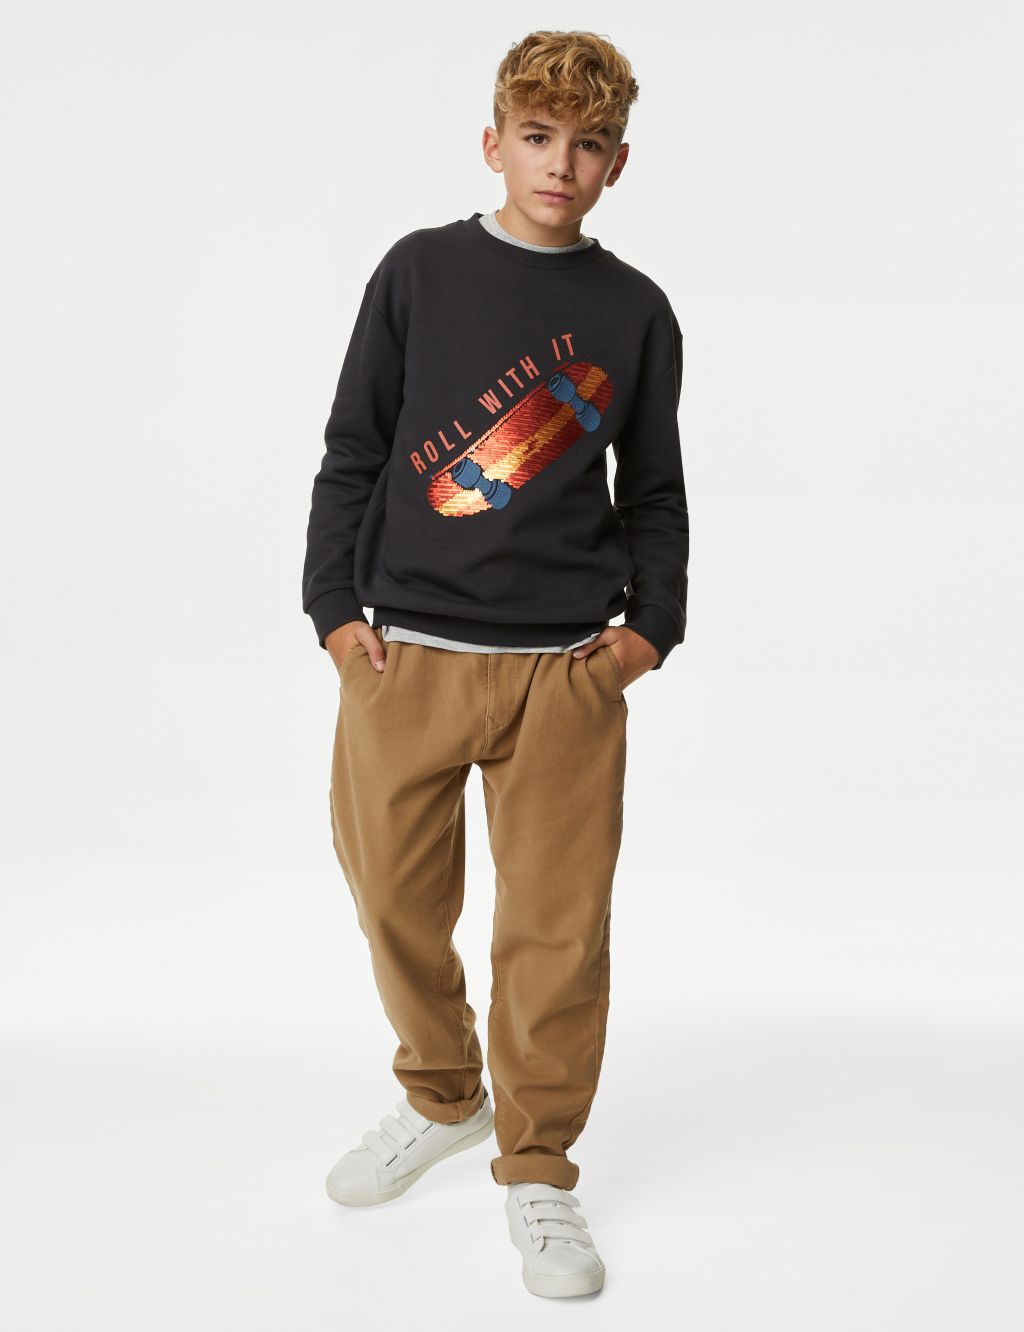 Cotton Rich Sequin Skateboard Sweatshirt (6-16 Yrs) image 1